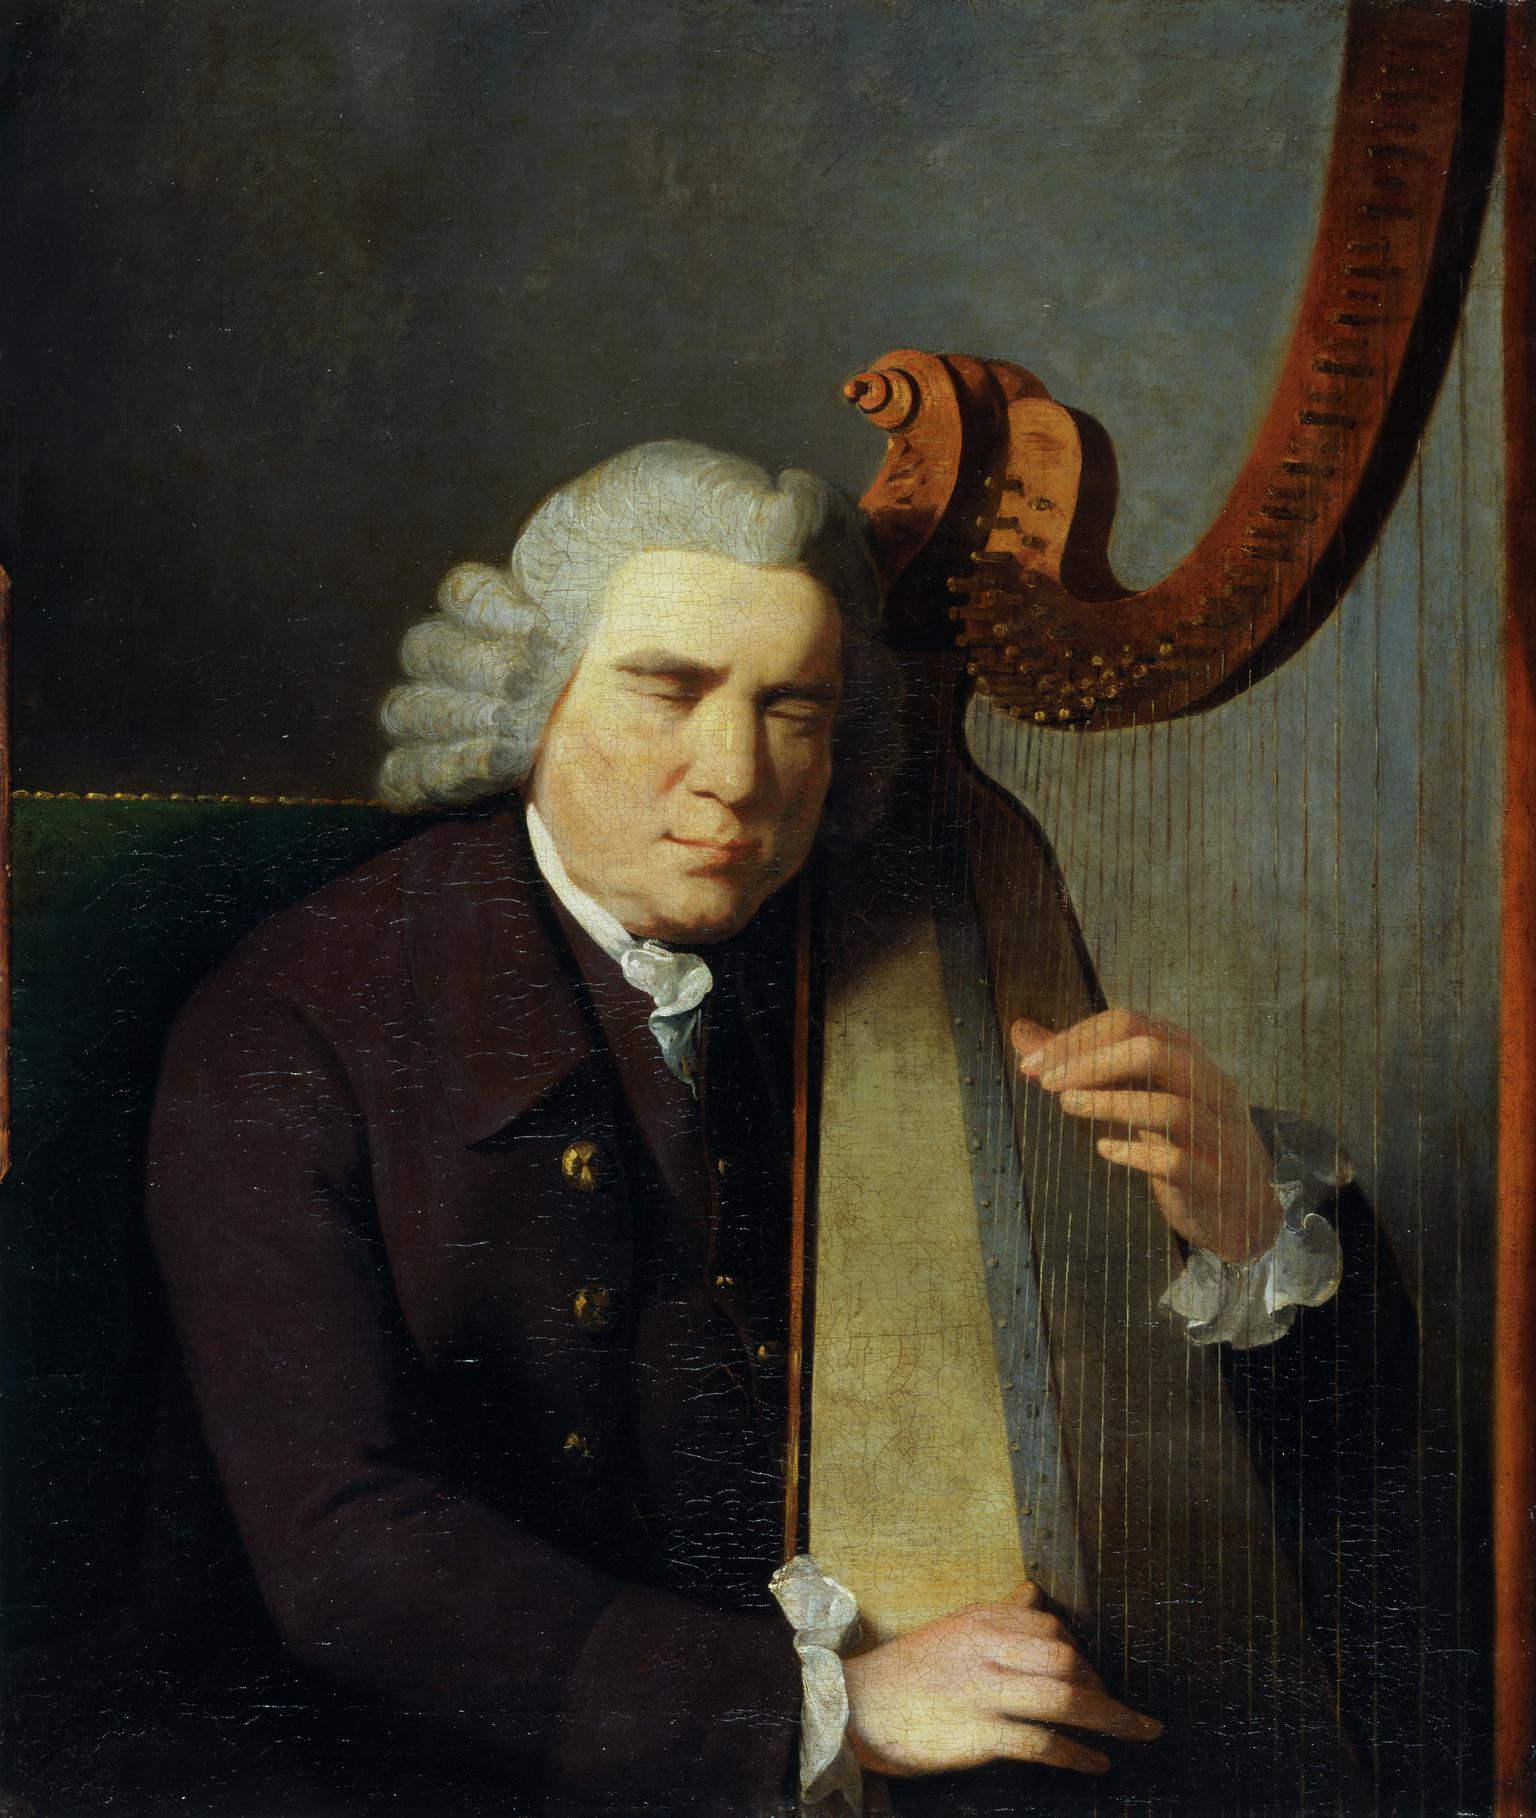 The Blind Harpist, John Parry (about 1710-1782)